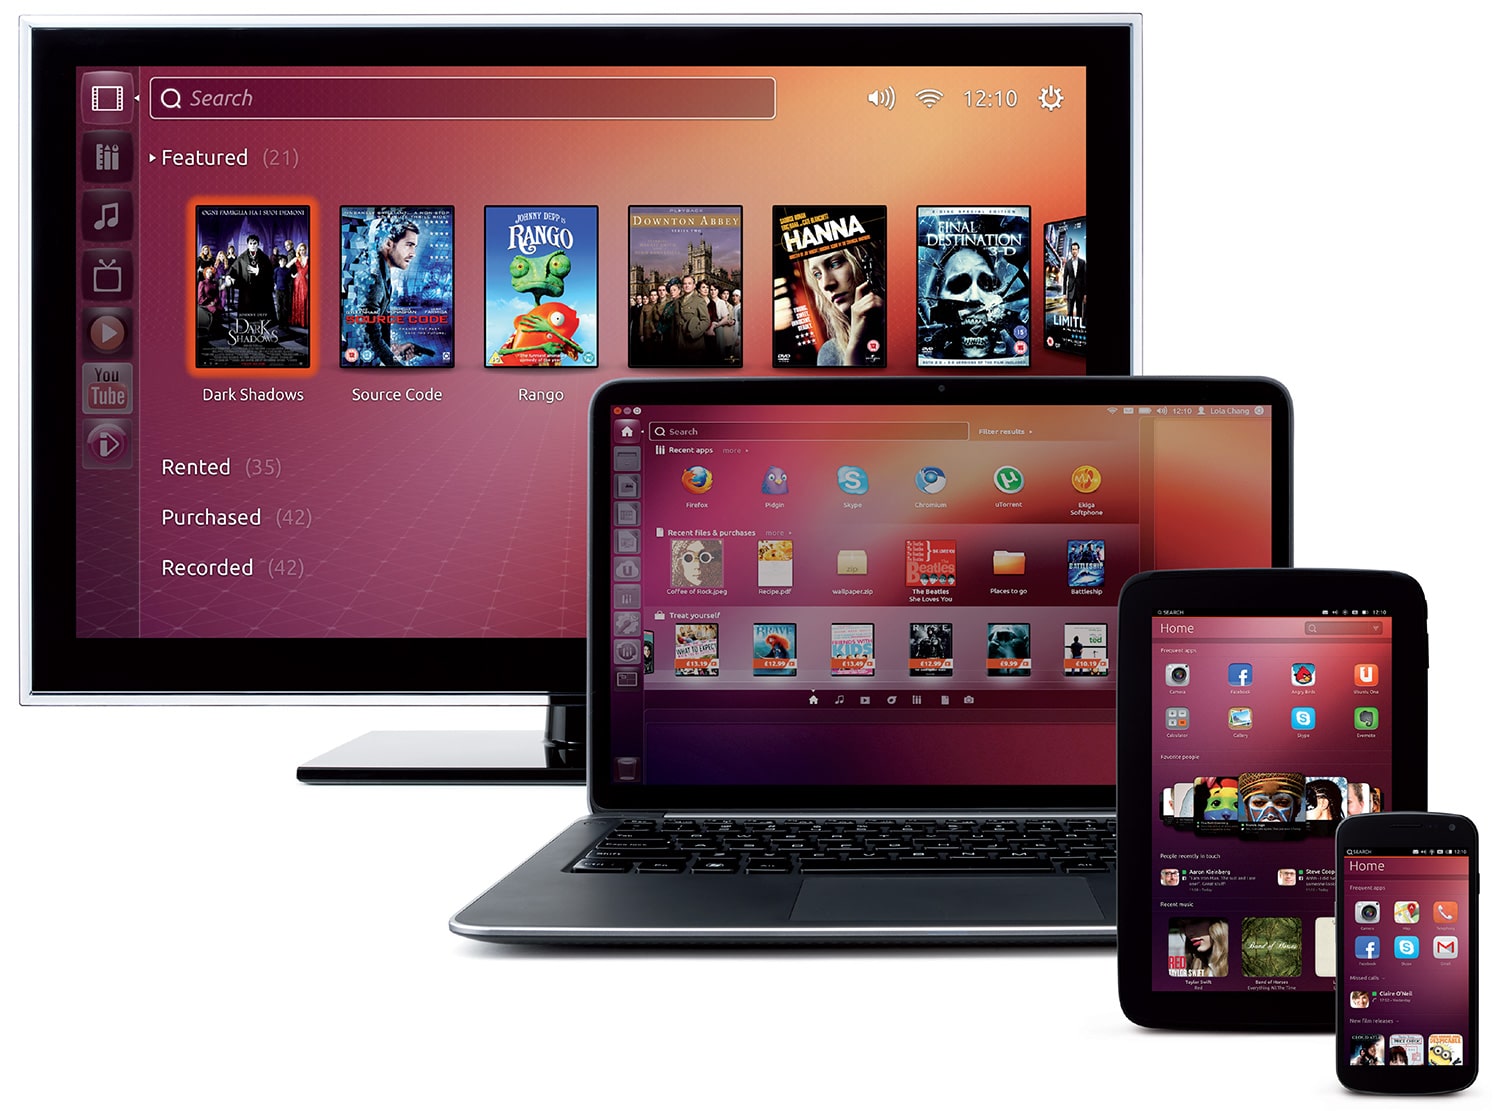 Ubuntu 14.04 LTS, listo para ser descargado